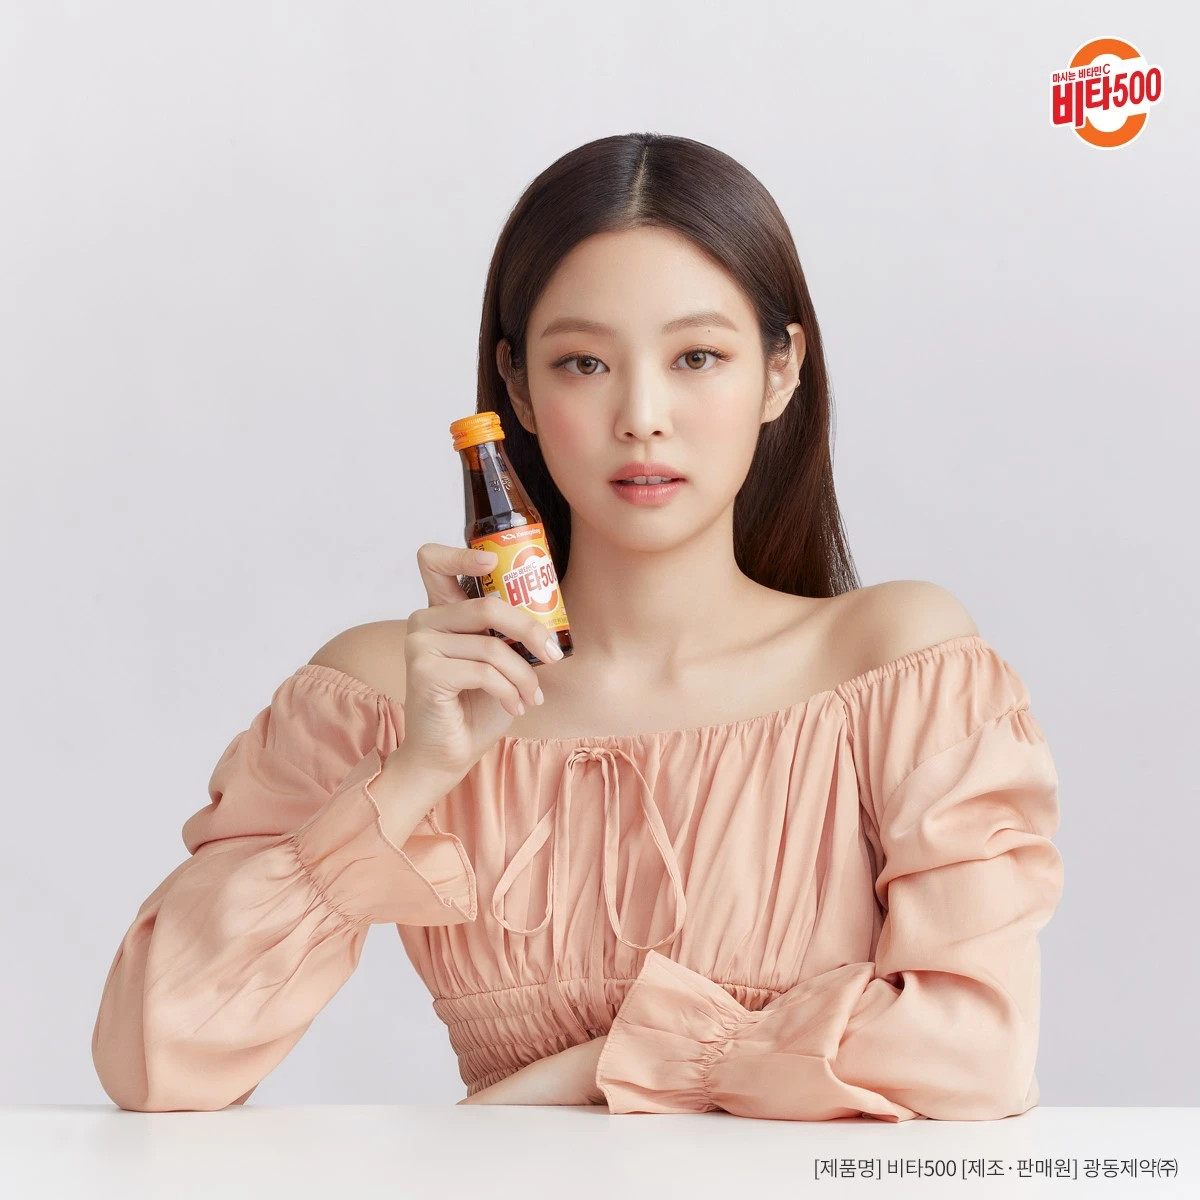 April 15, 2021 Kwangdong Pharmaceutical SNS Update - Jennie's Vitamin C ...